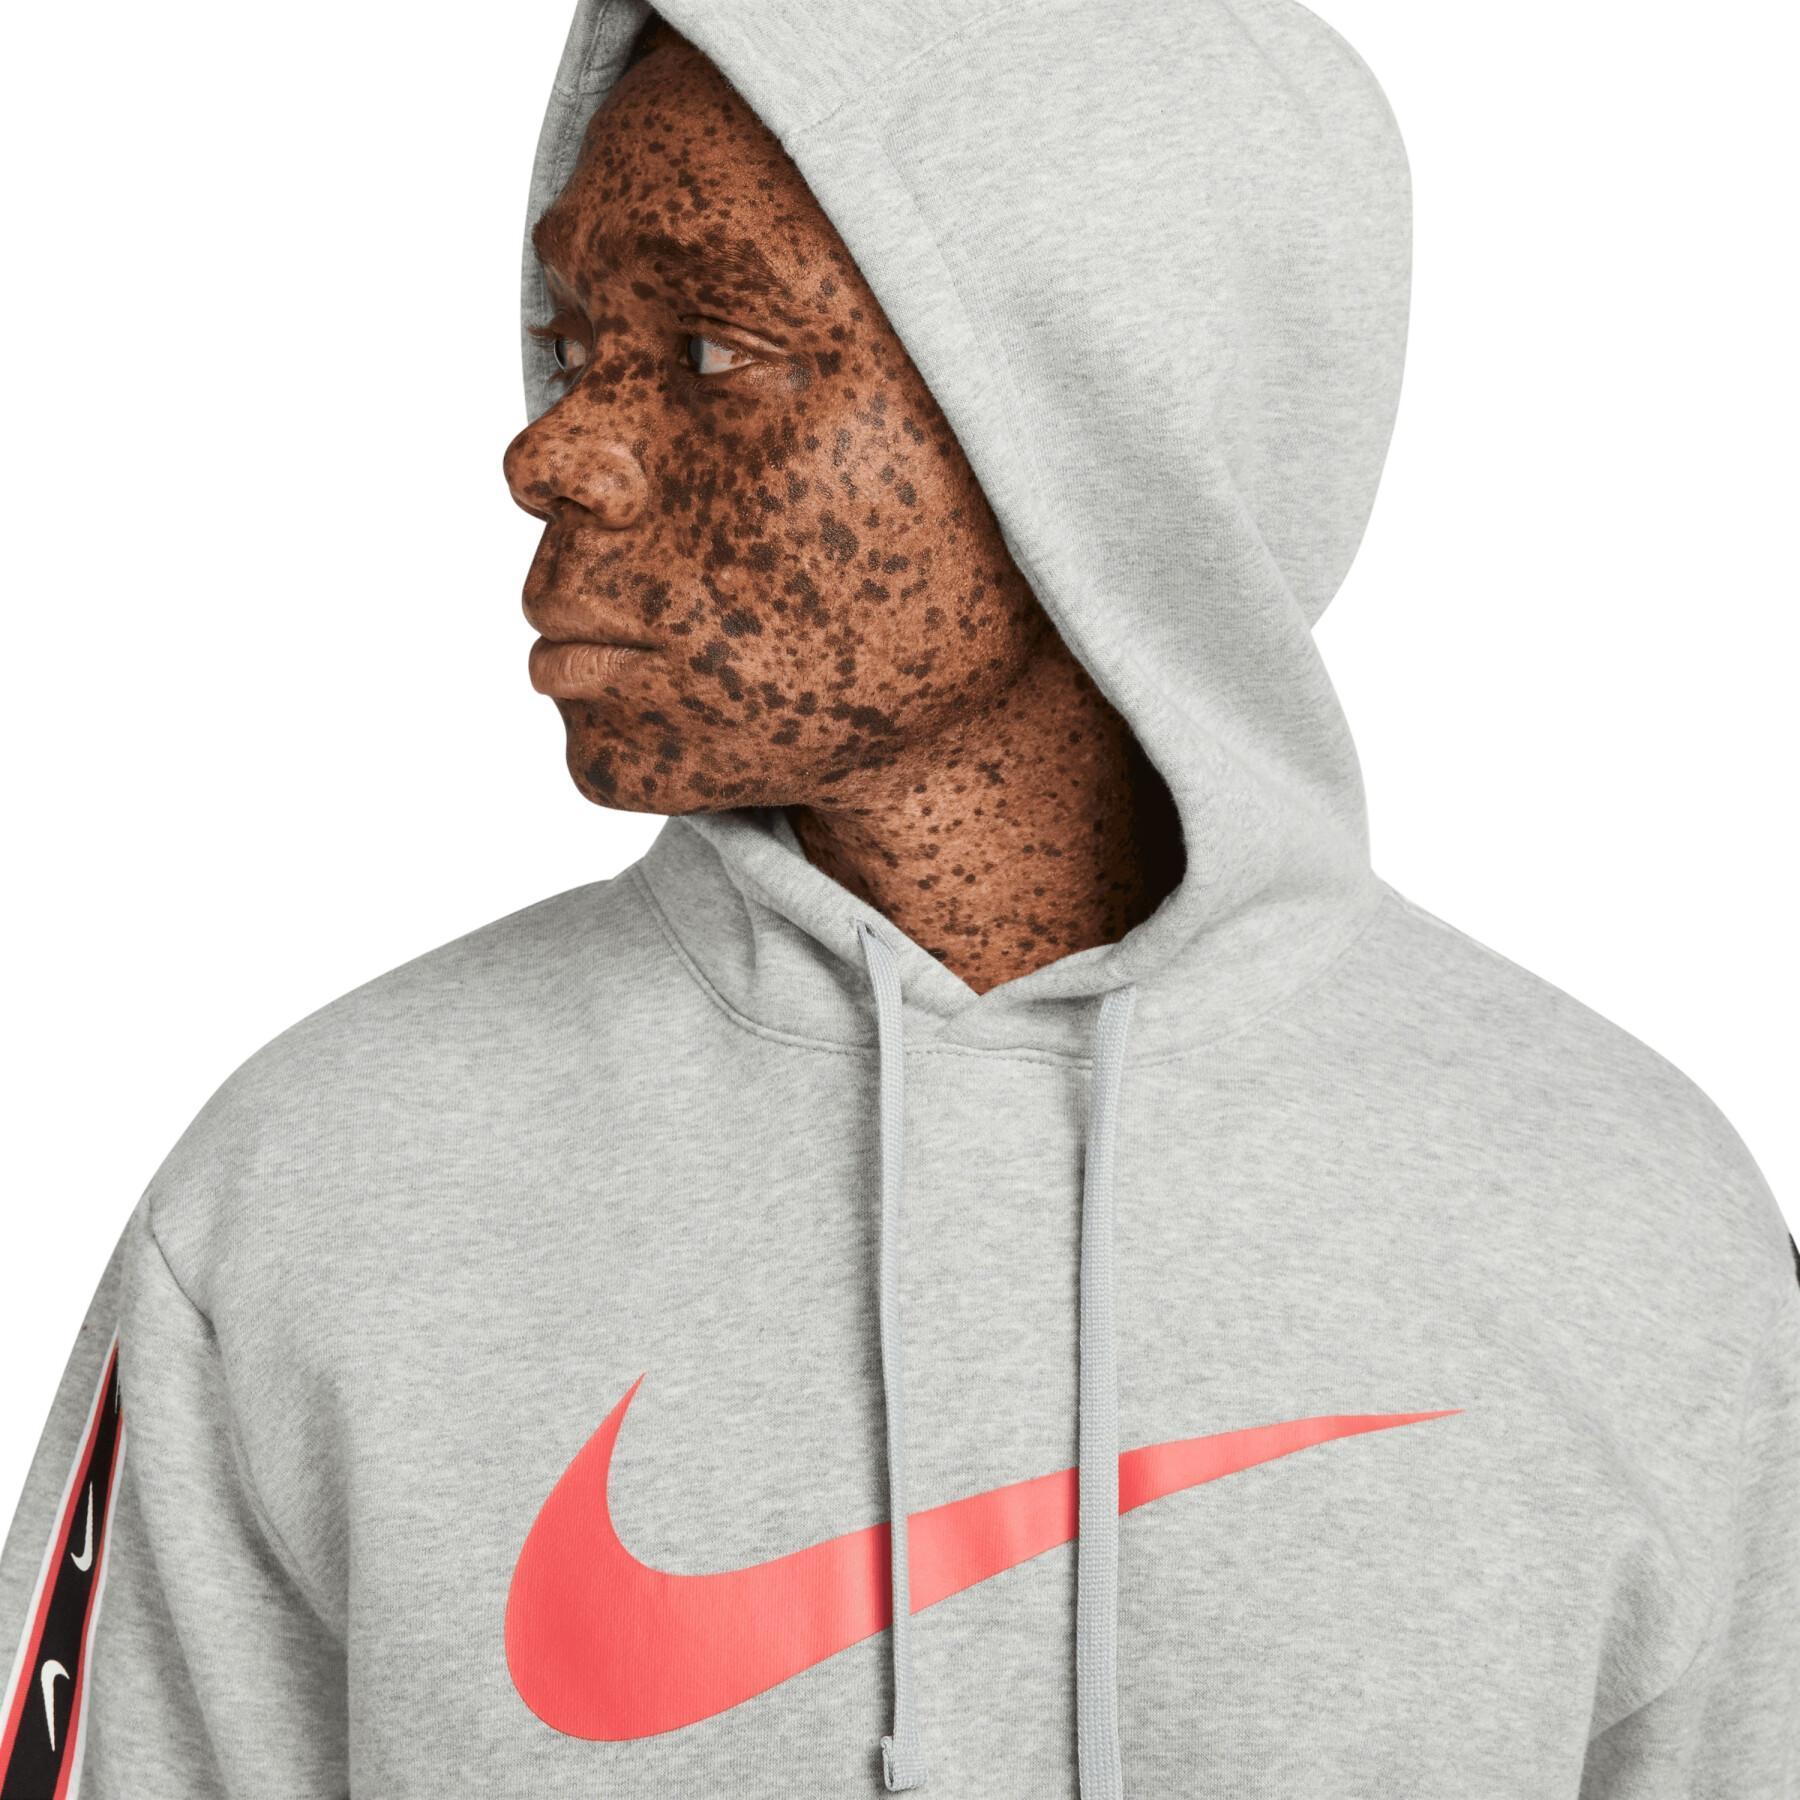 Sweatshirt hooded Nike Sportswear Repeat